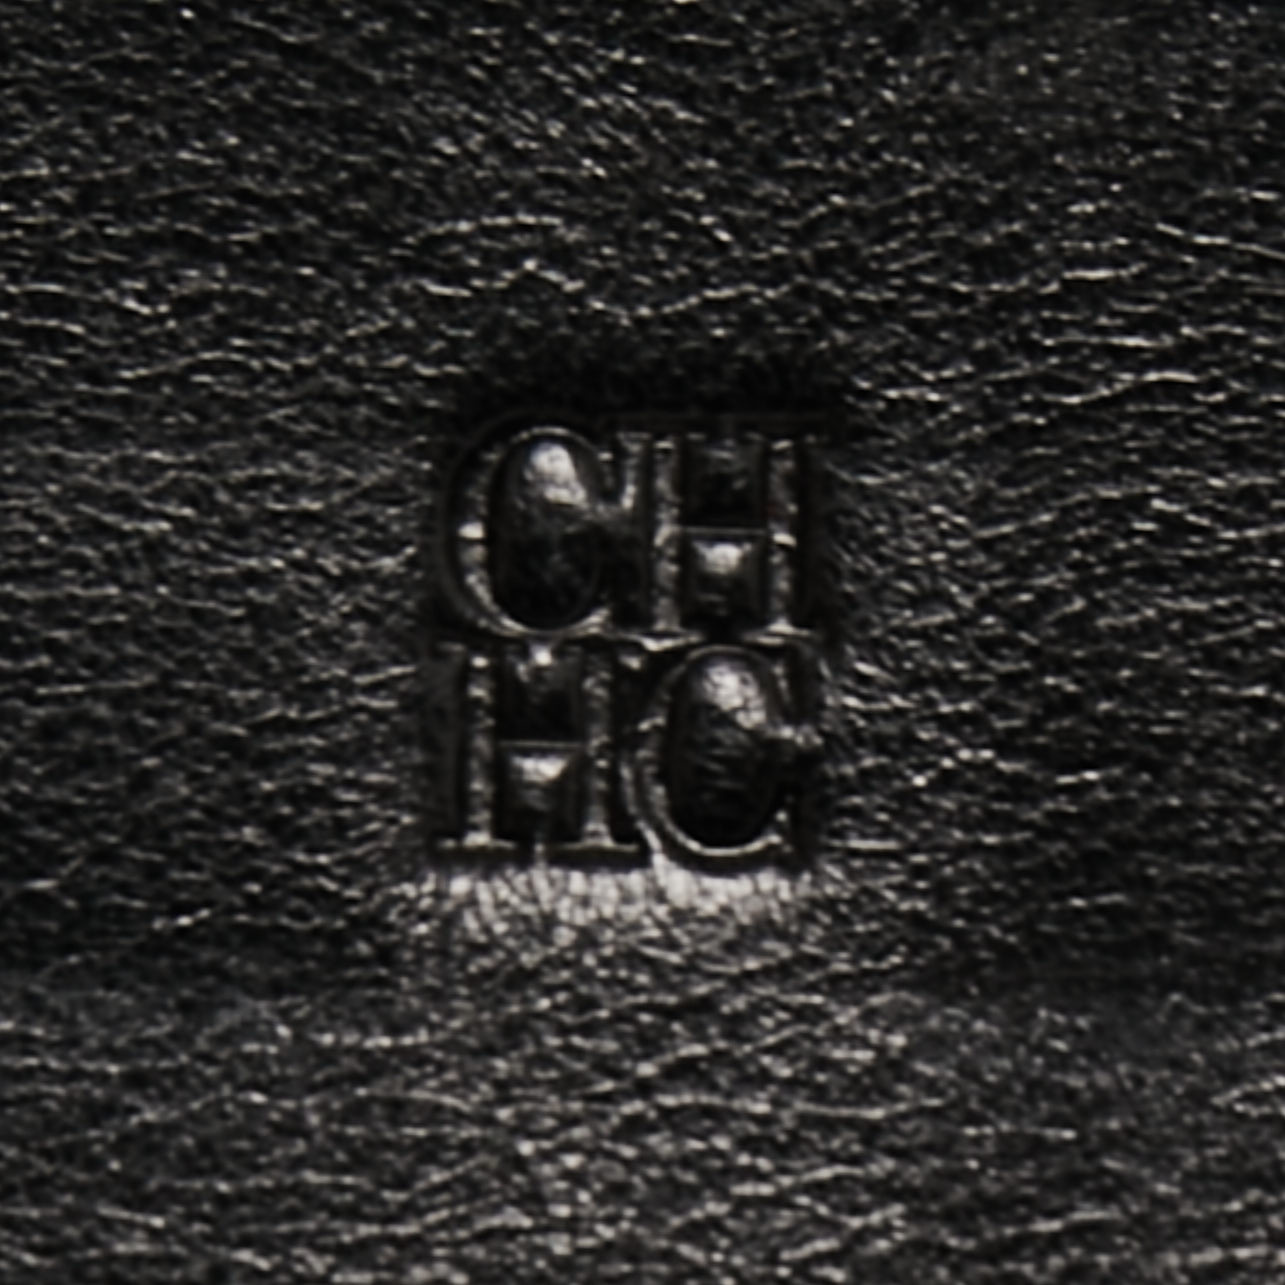 Carolina Herrera Black Chevron Quilted Leather Bifold Continental Wallet